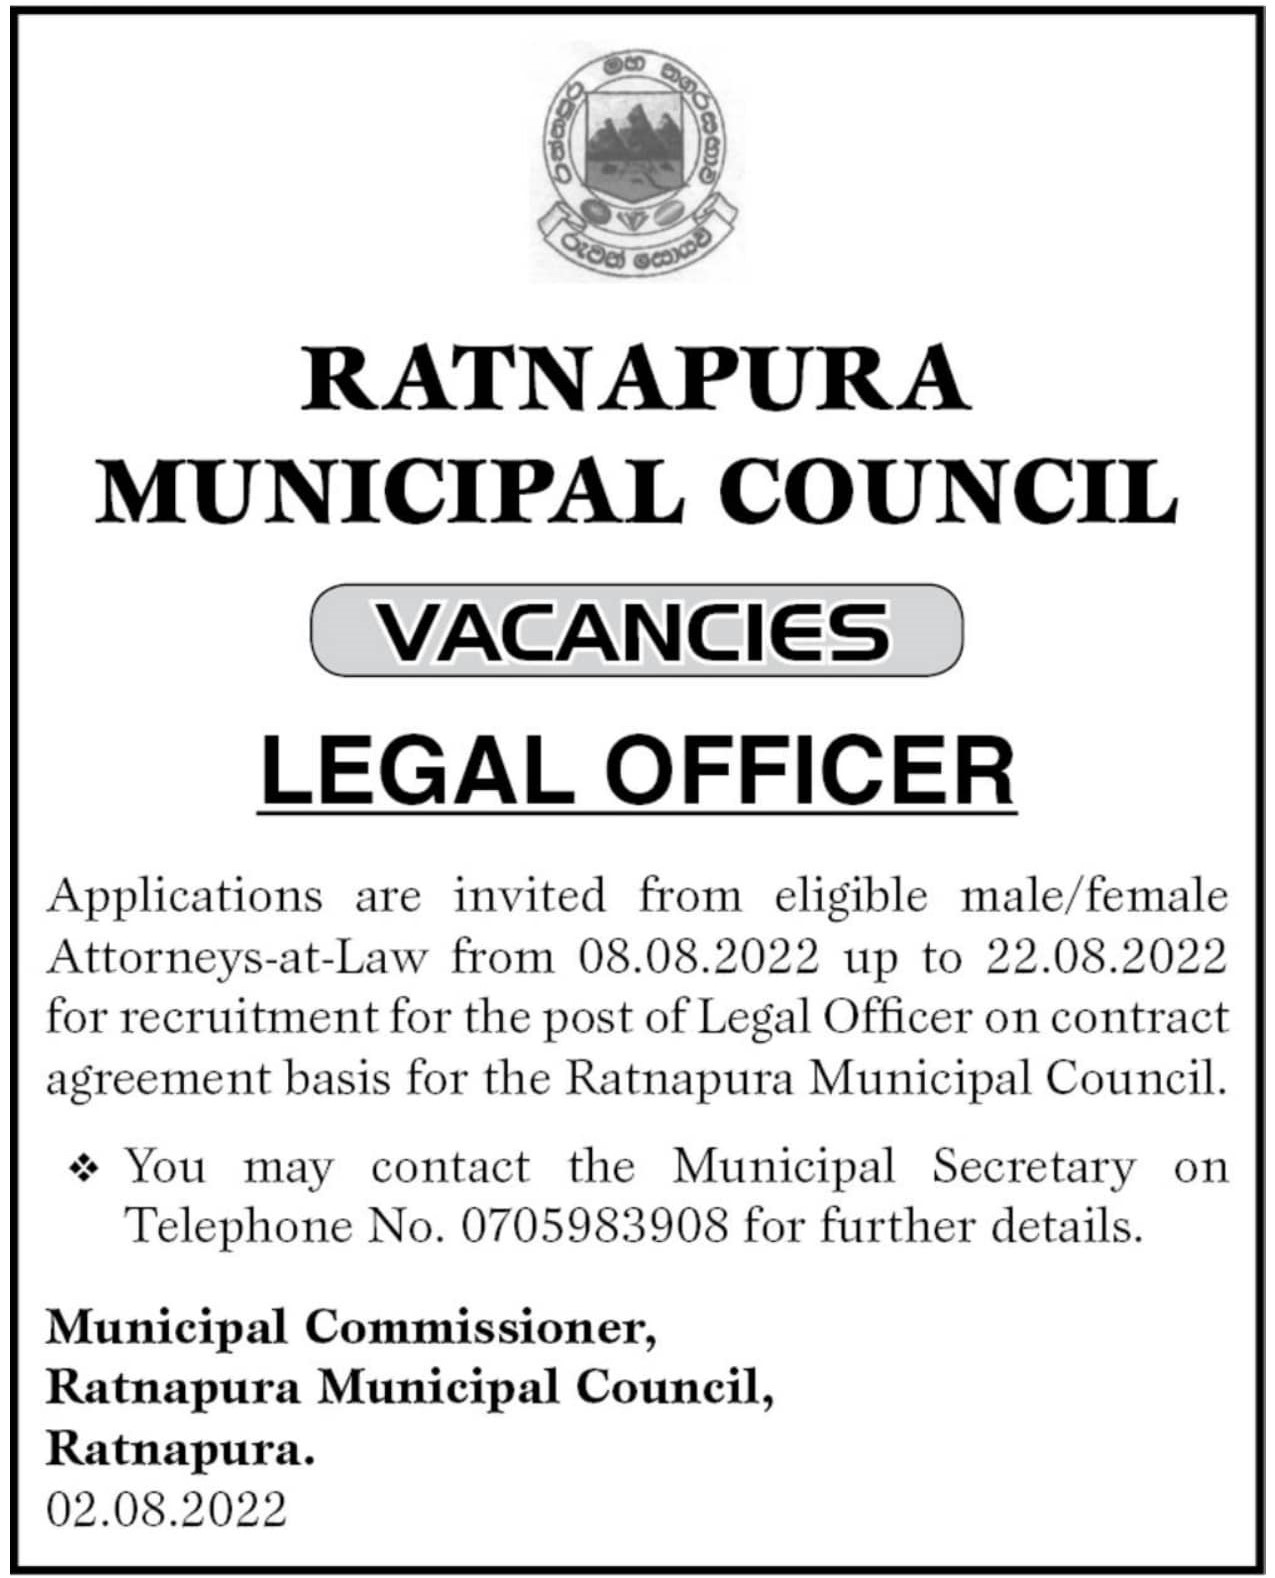 Legal Officer Vacancies 2022 in Ratnapura Municipal Council Details, Application